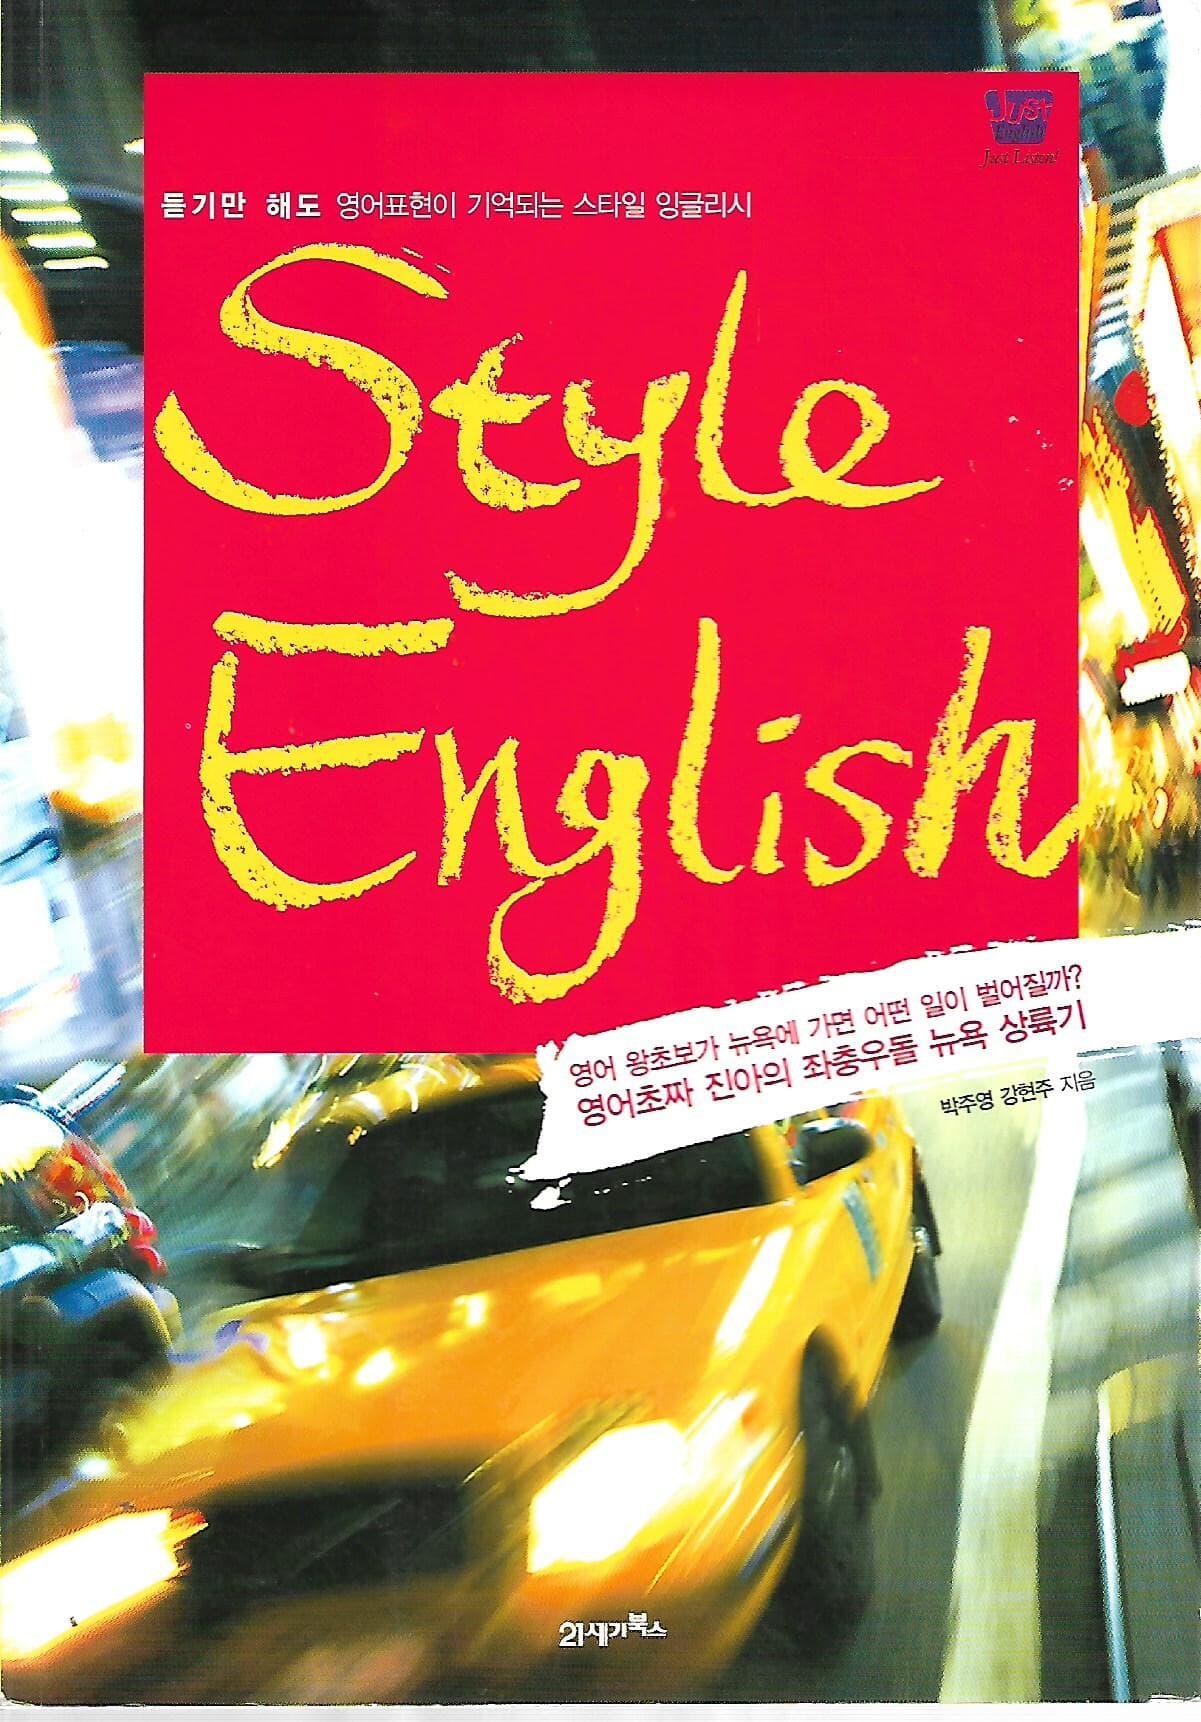 Style English (부록CD없음)